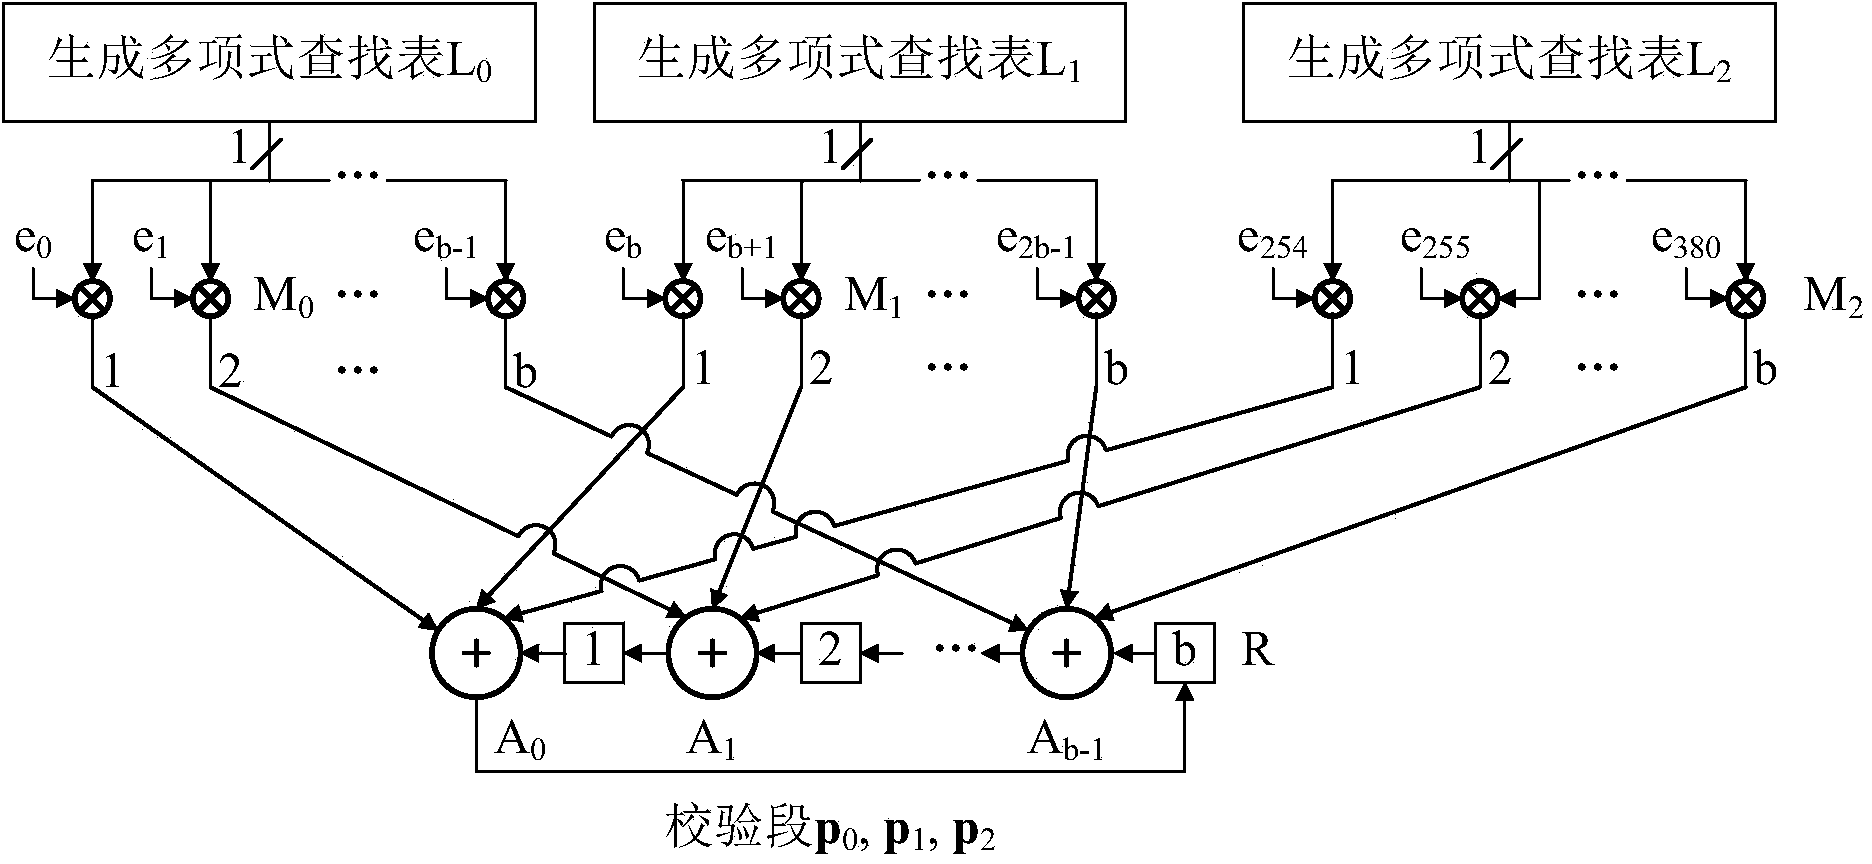 Full parallel input quasi-cyclic matrix multiplier based on ring shift left in DTMB